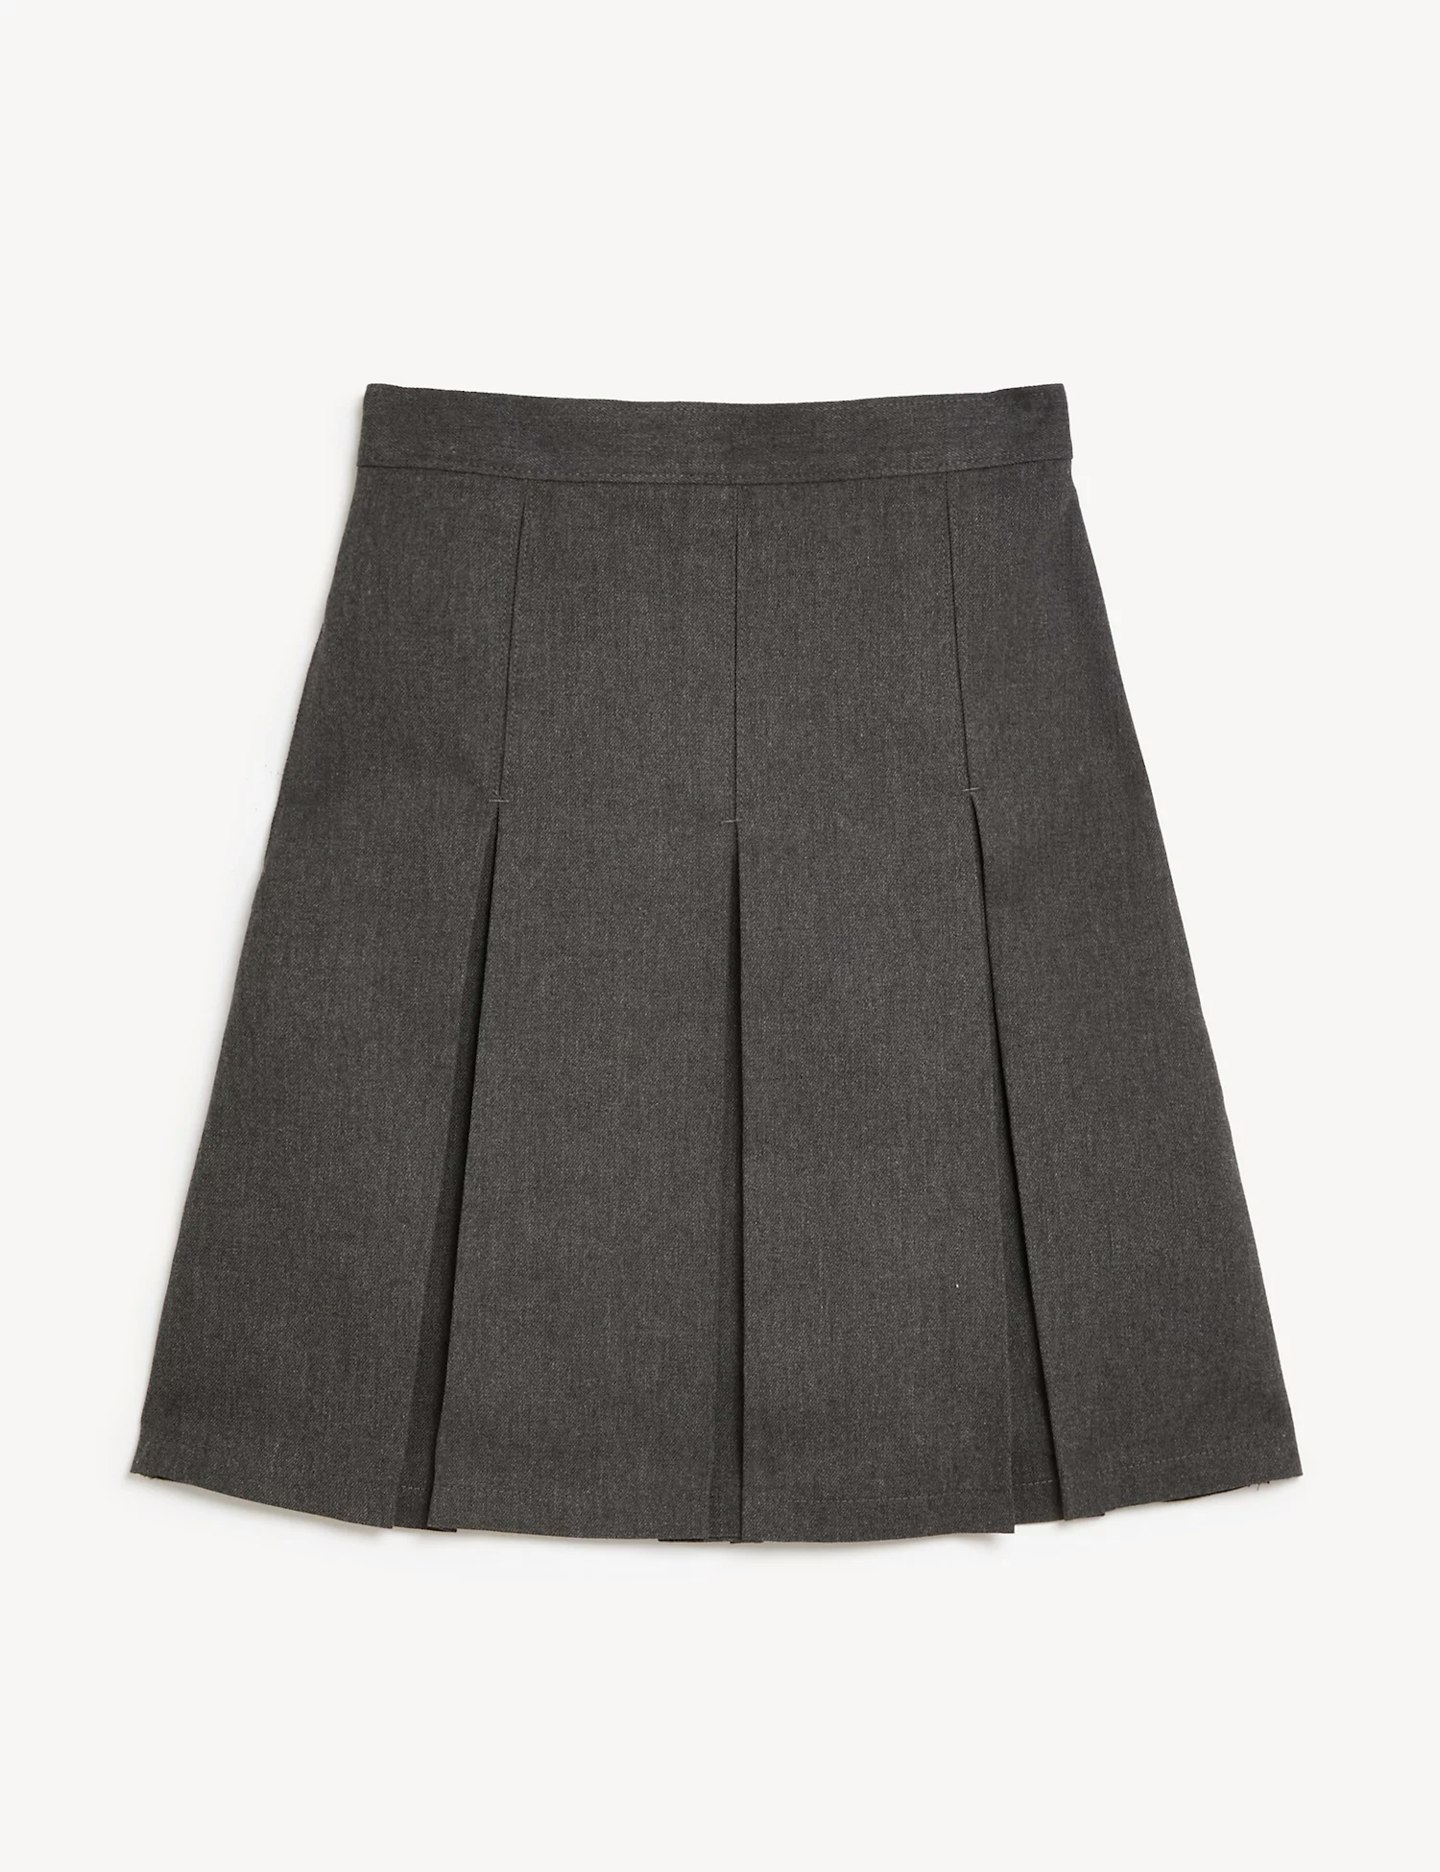 m&S school skirt 